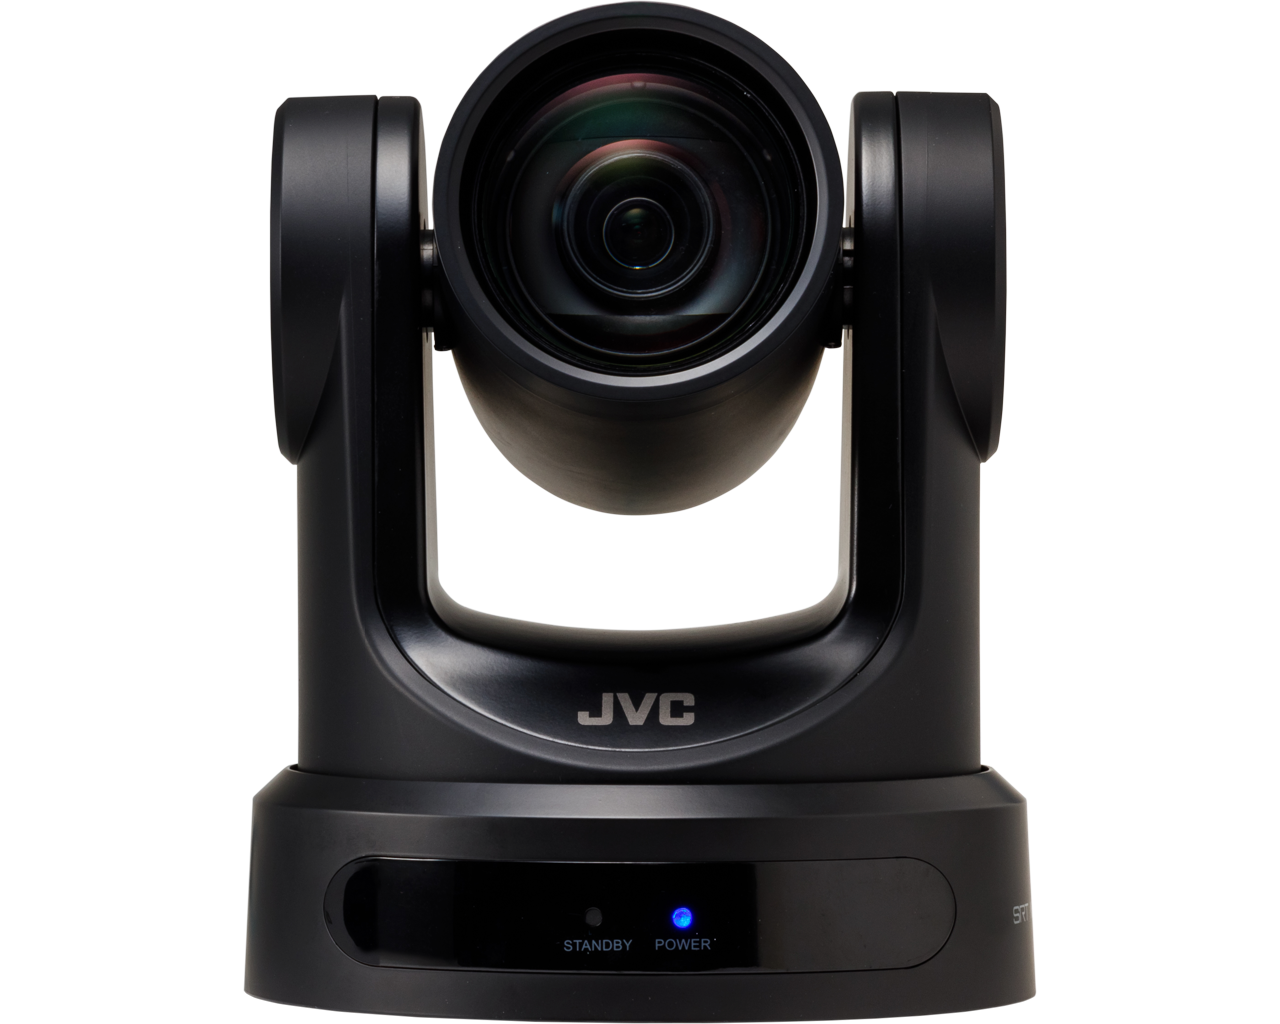 JVC  KY-PZ200NBE HD PTZ camera, black, 20x zoom, with NDI, dual streaming